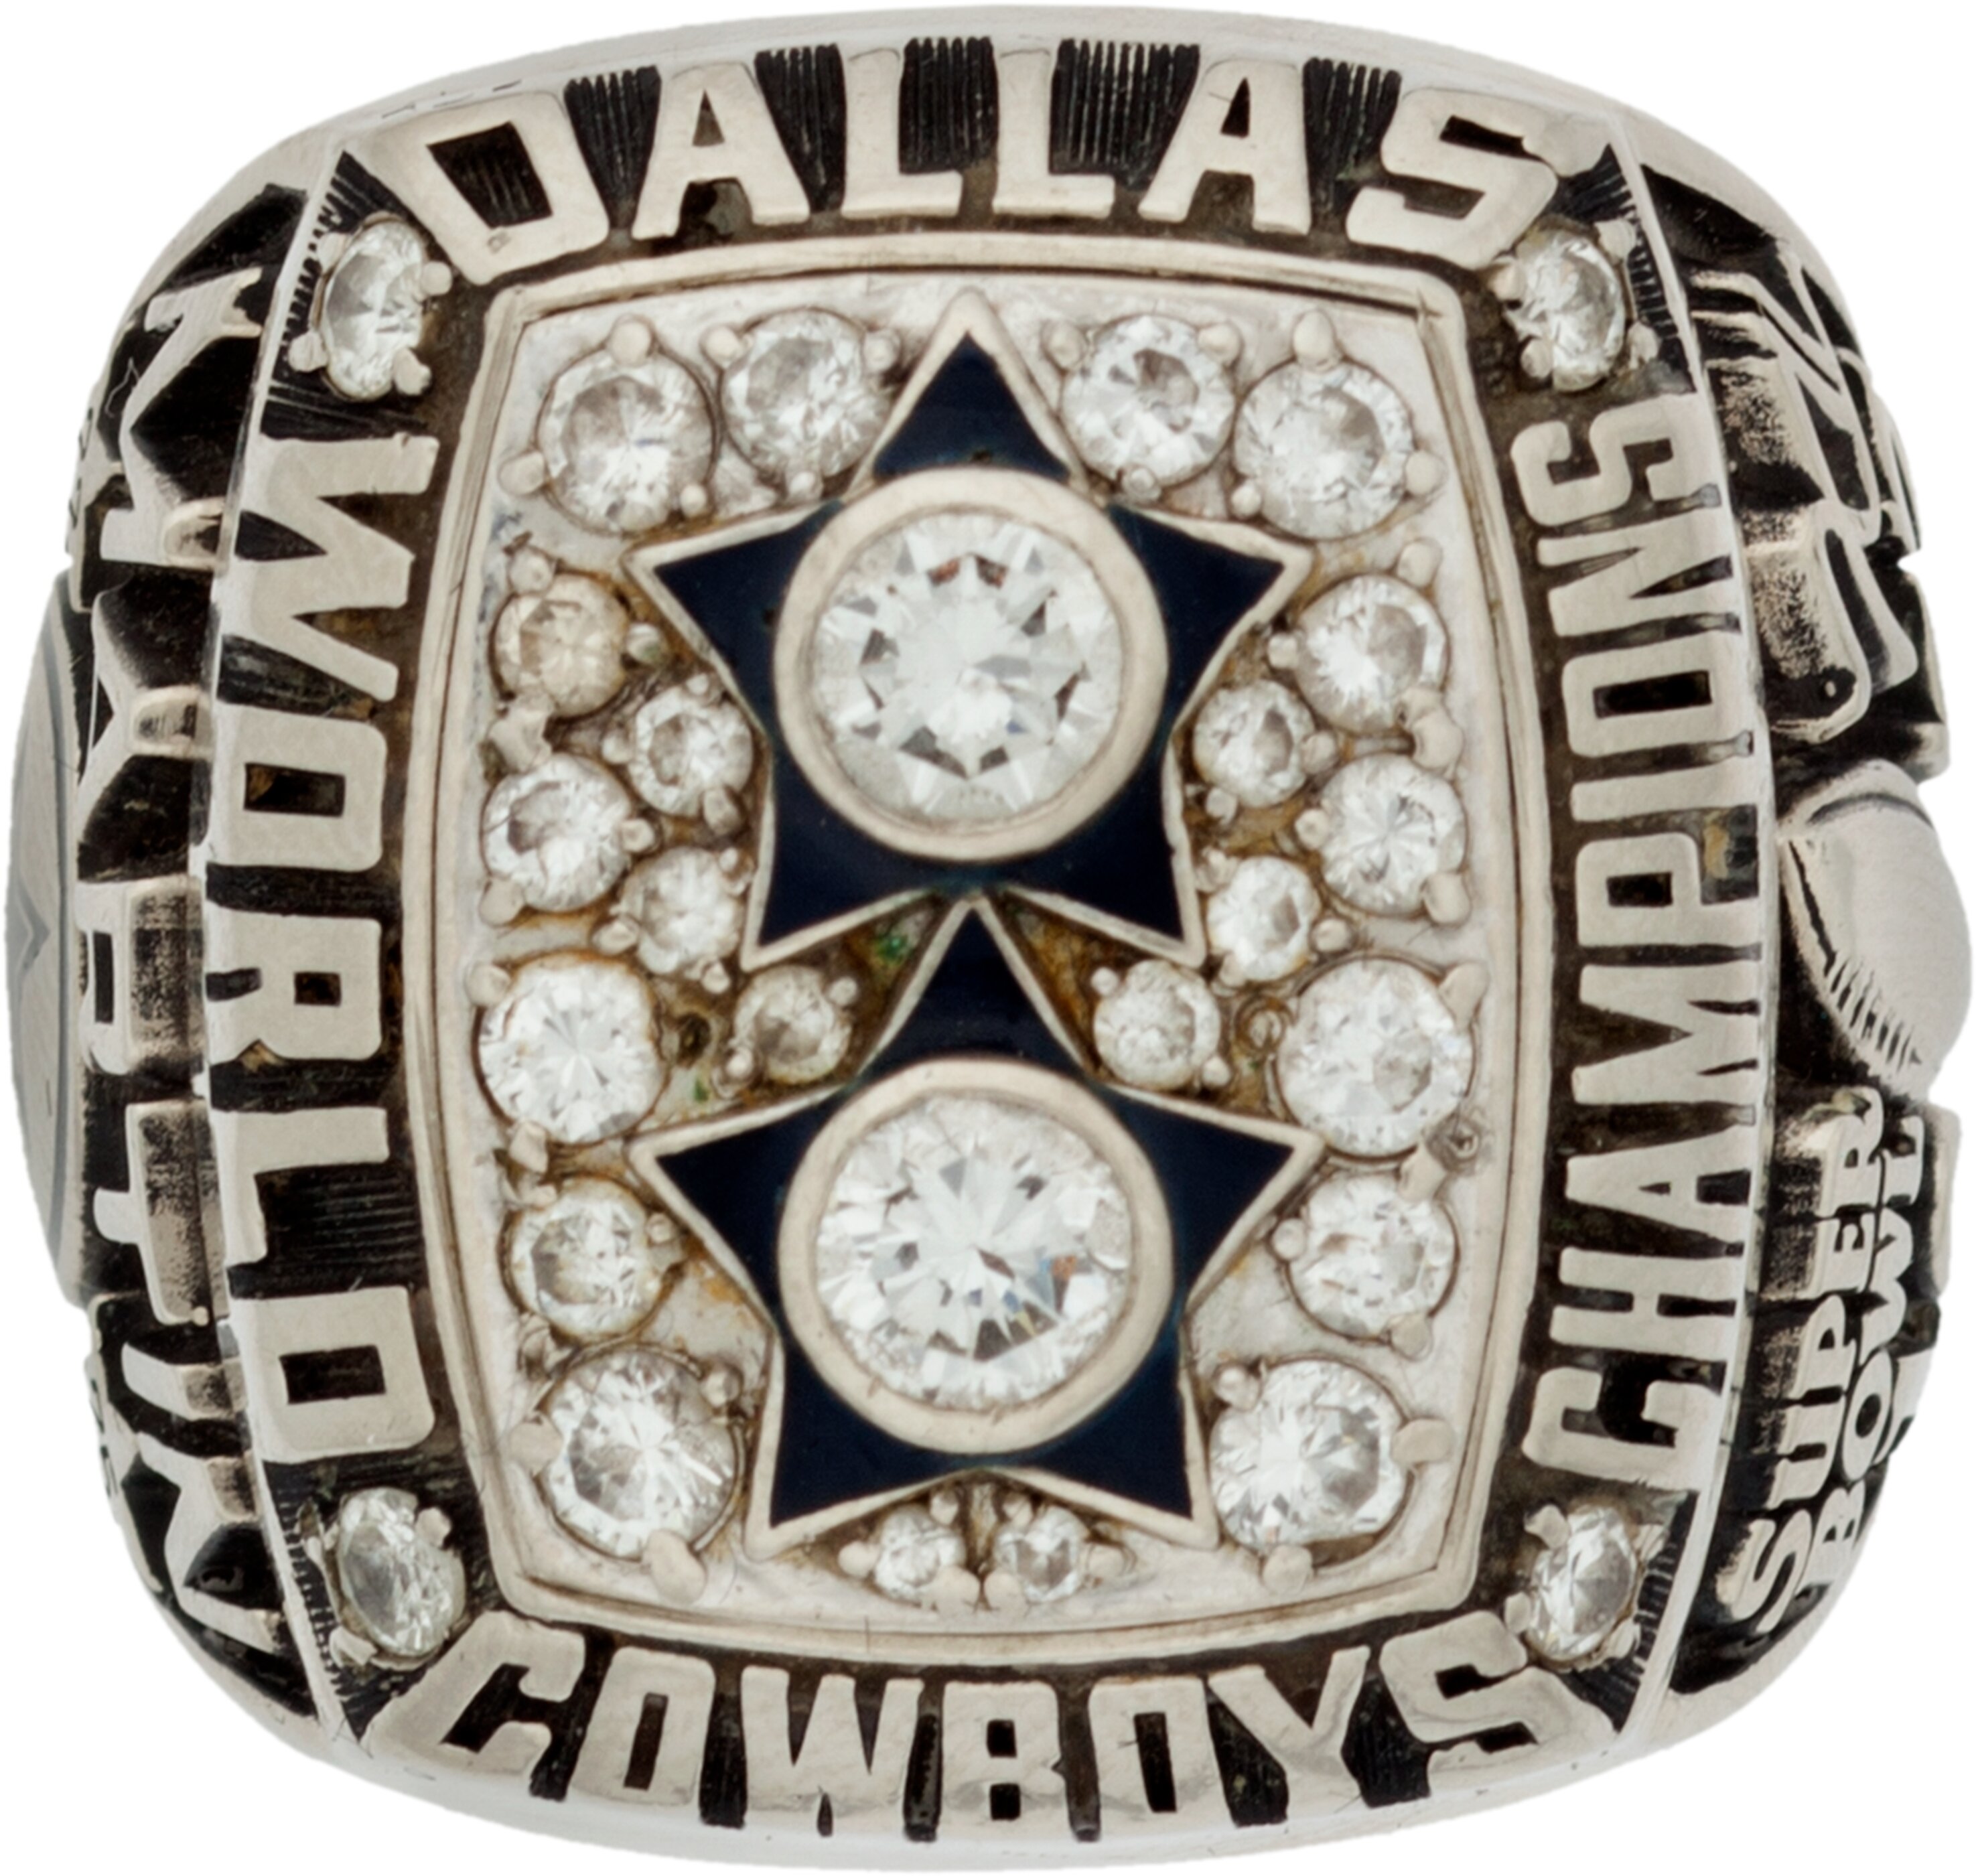 1977 Dallas Cowboys Super Bowl XII Championship Ring Presented to